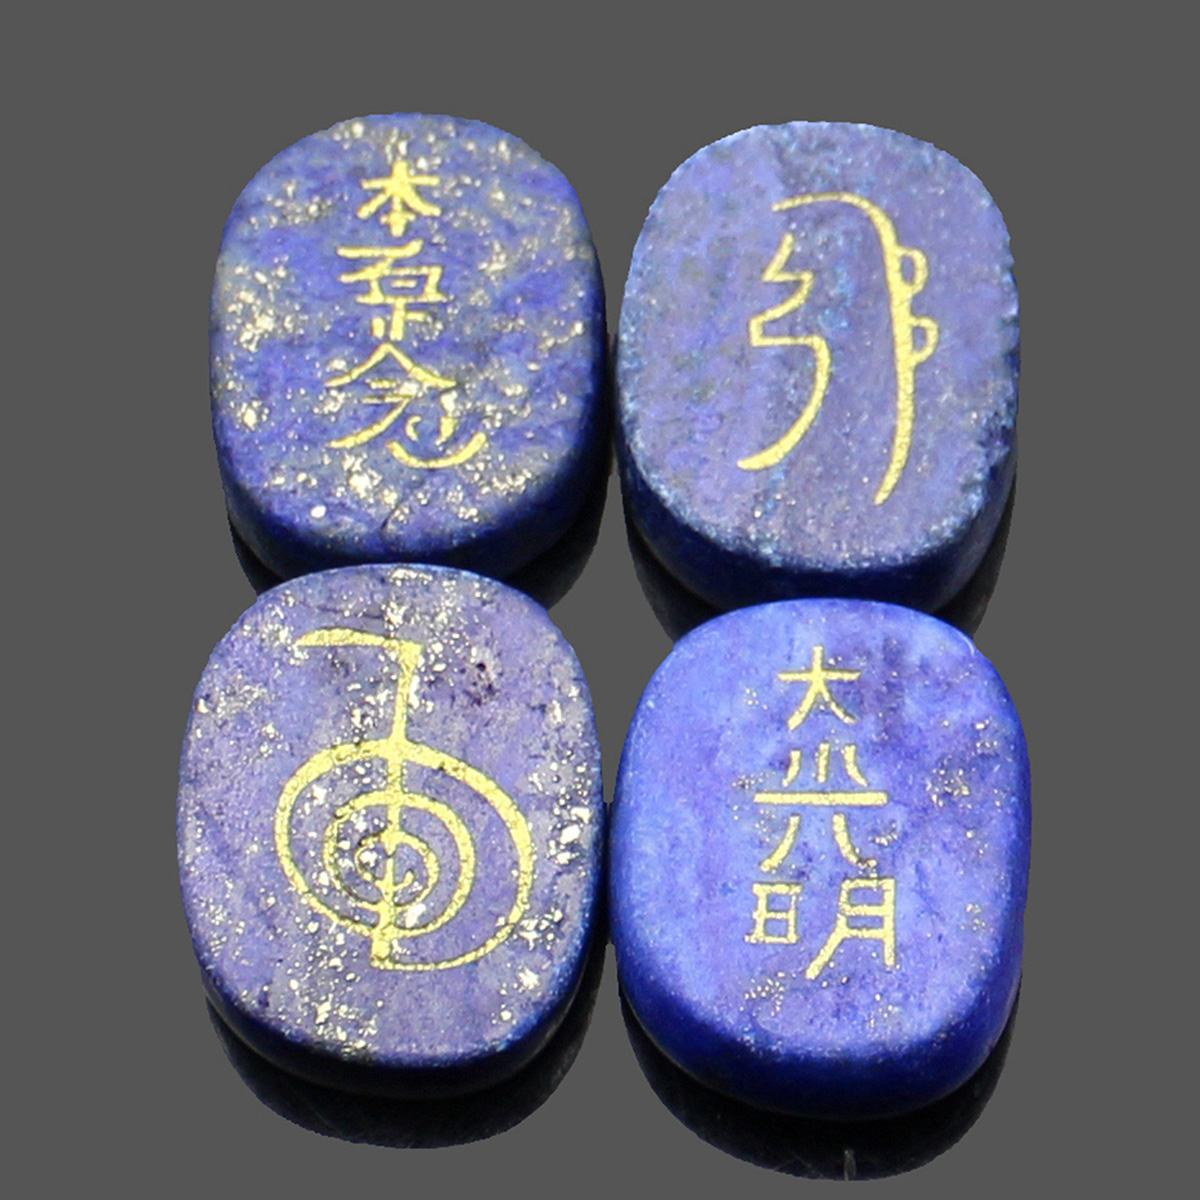 4Pcs/set Natural Gemstone Energy Crystal Stone Chinese Stlye Engraved Usui Reiki Symbol Healing Yoga Irregular Stones Home Decor